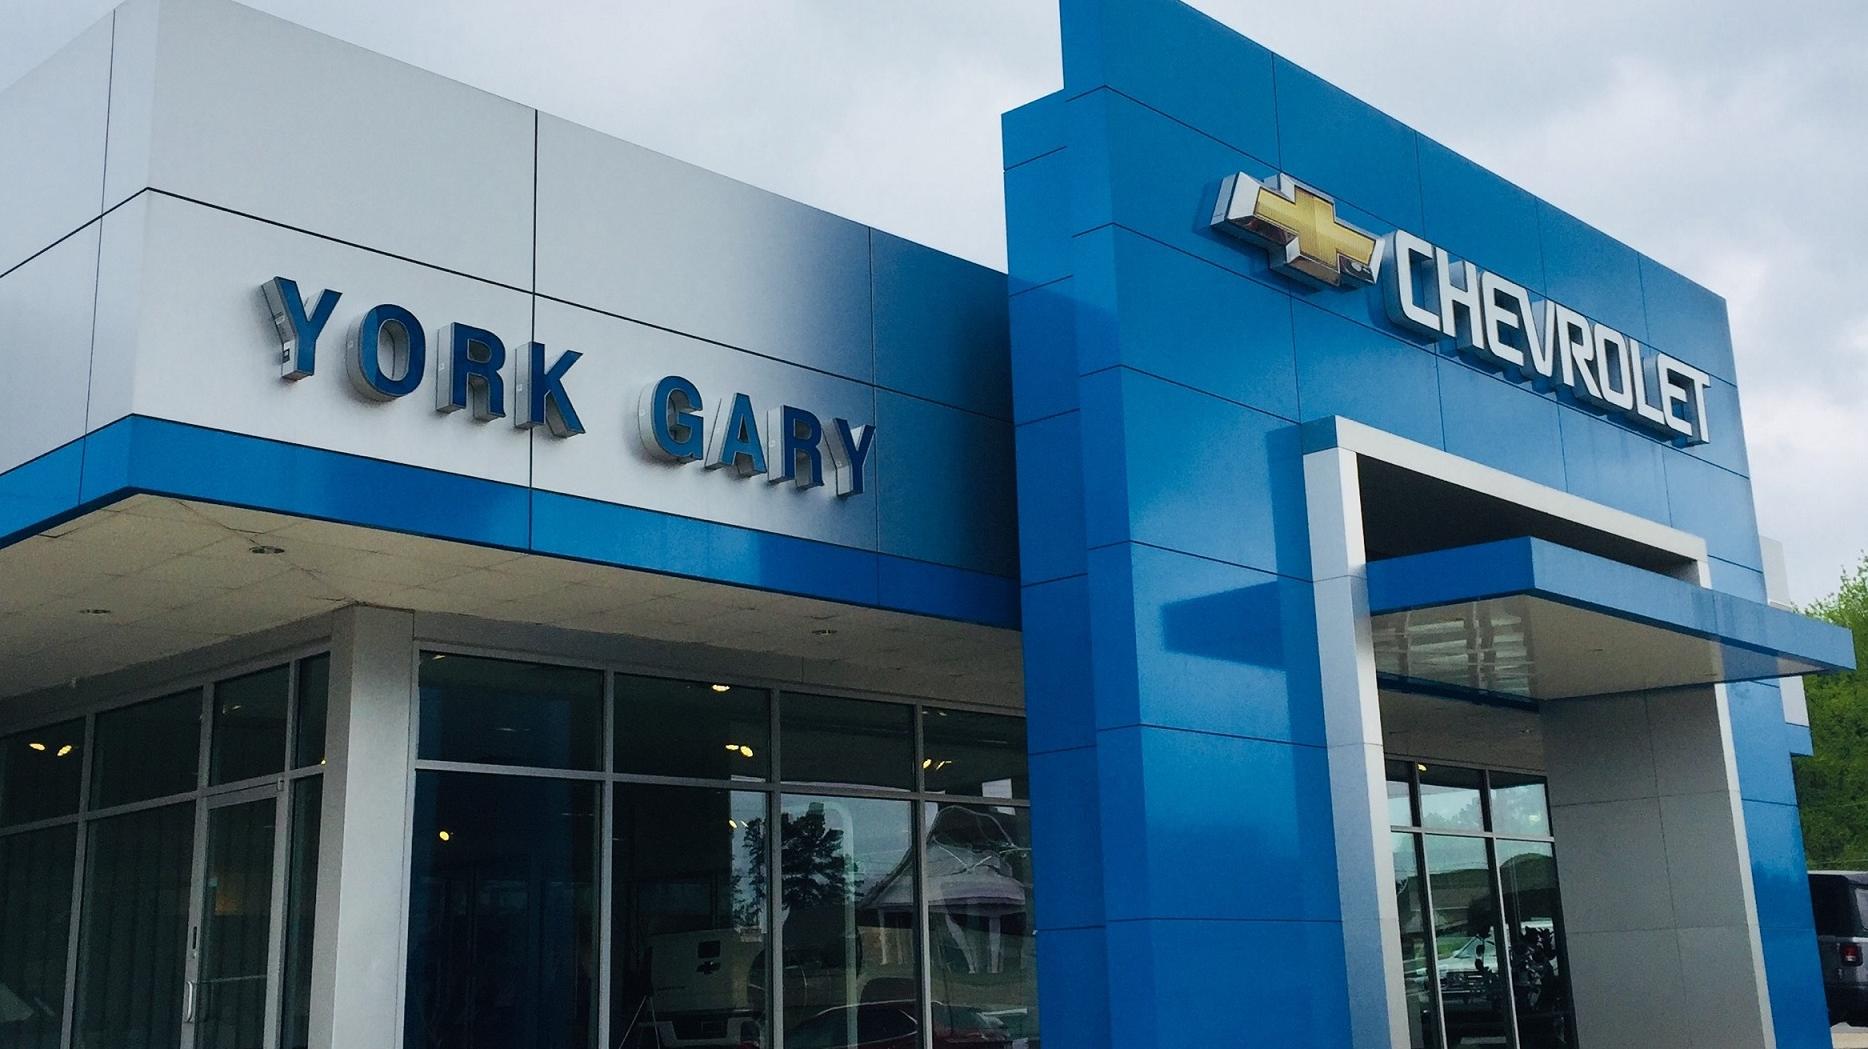 York Gary Autoplex 